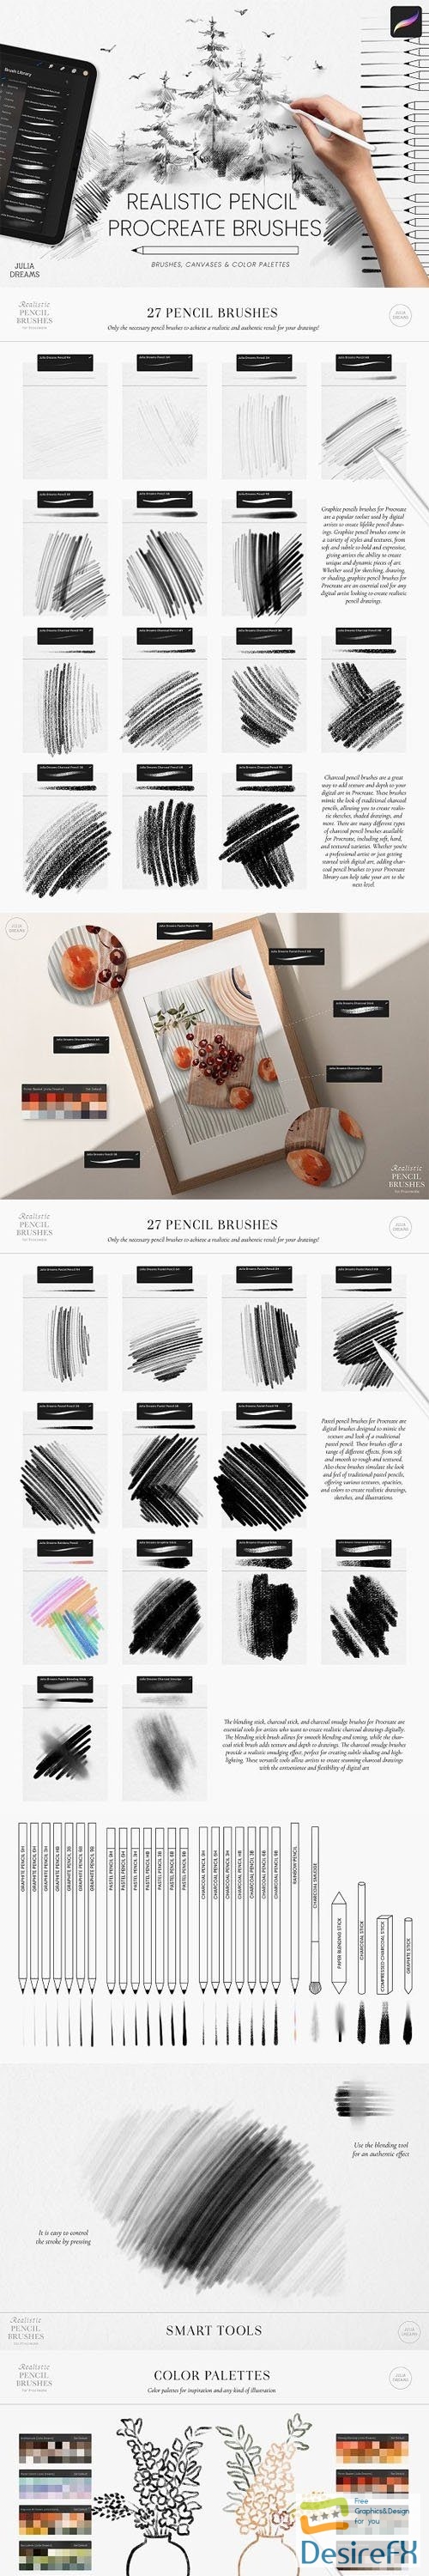 Realistic Pencil Procreate Brushes - Painting Kit for Procreate iPad